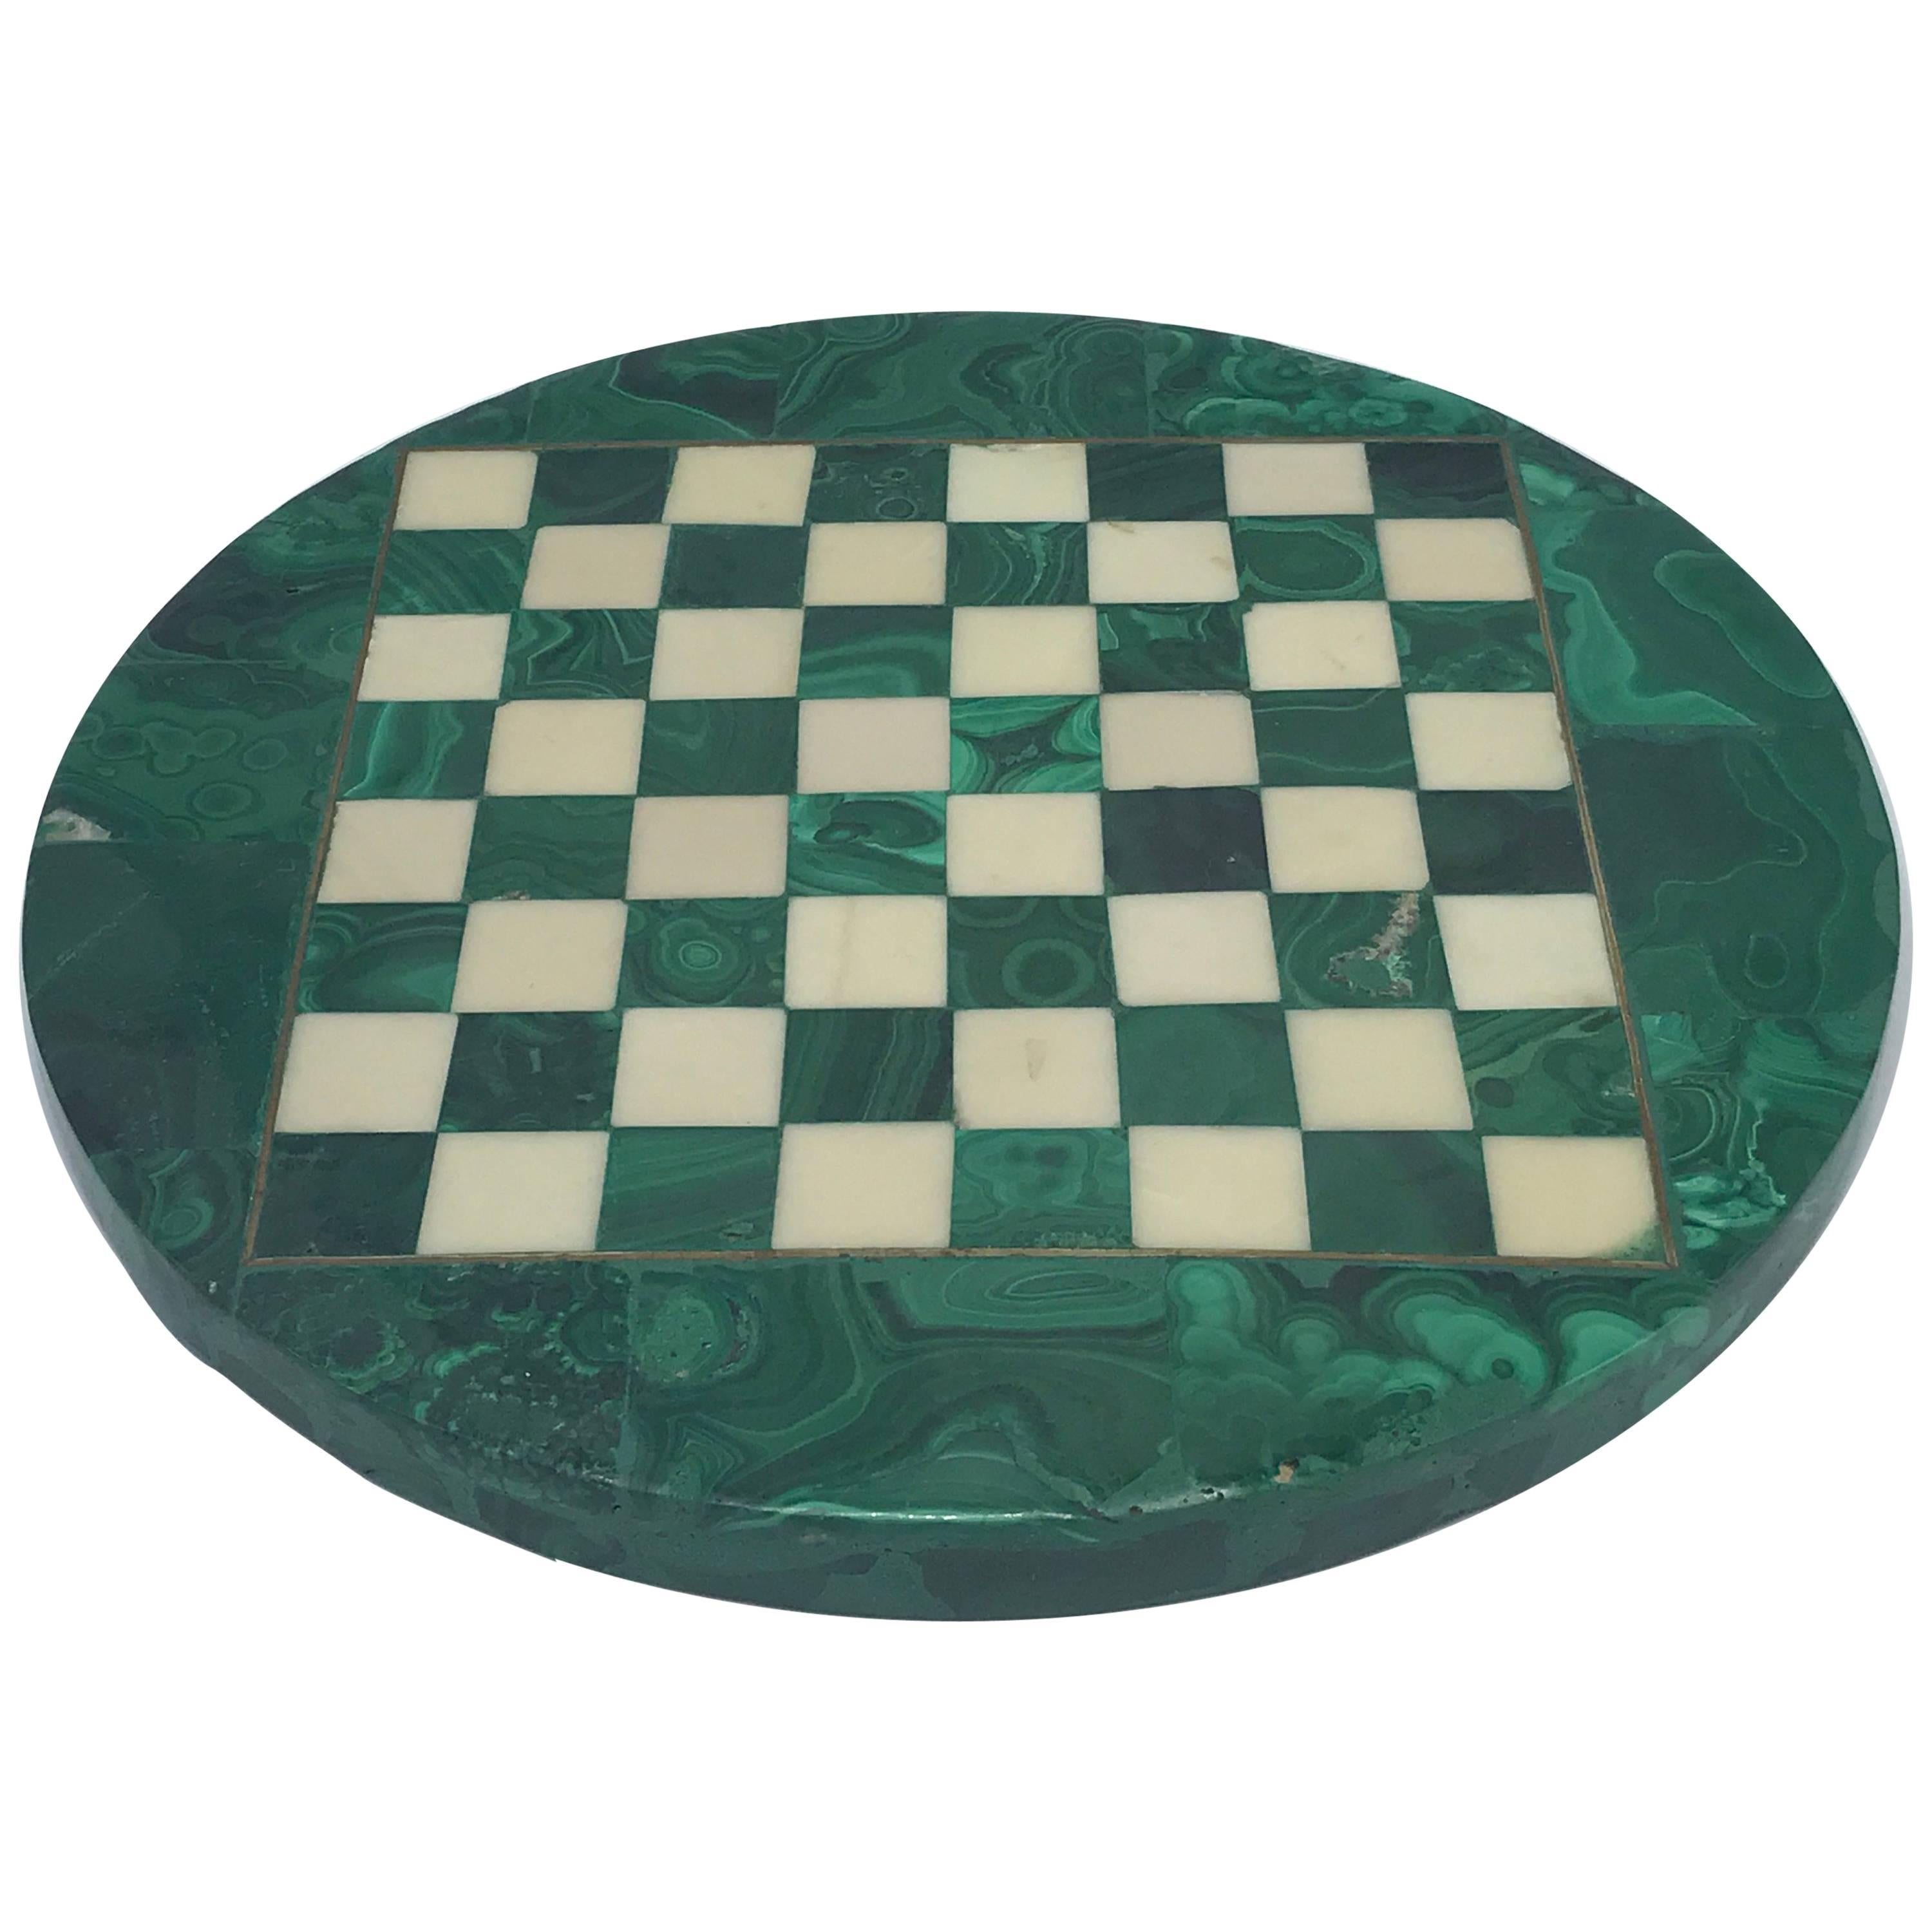 1960s Italian Malachite and Brass Inlay Chessboard Cheeseboard Plate